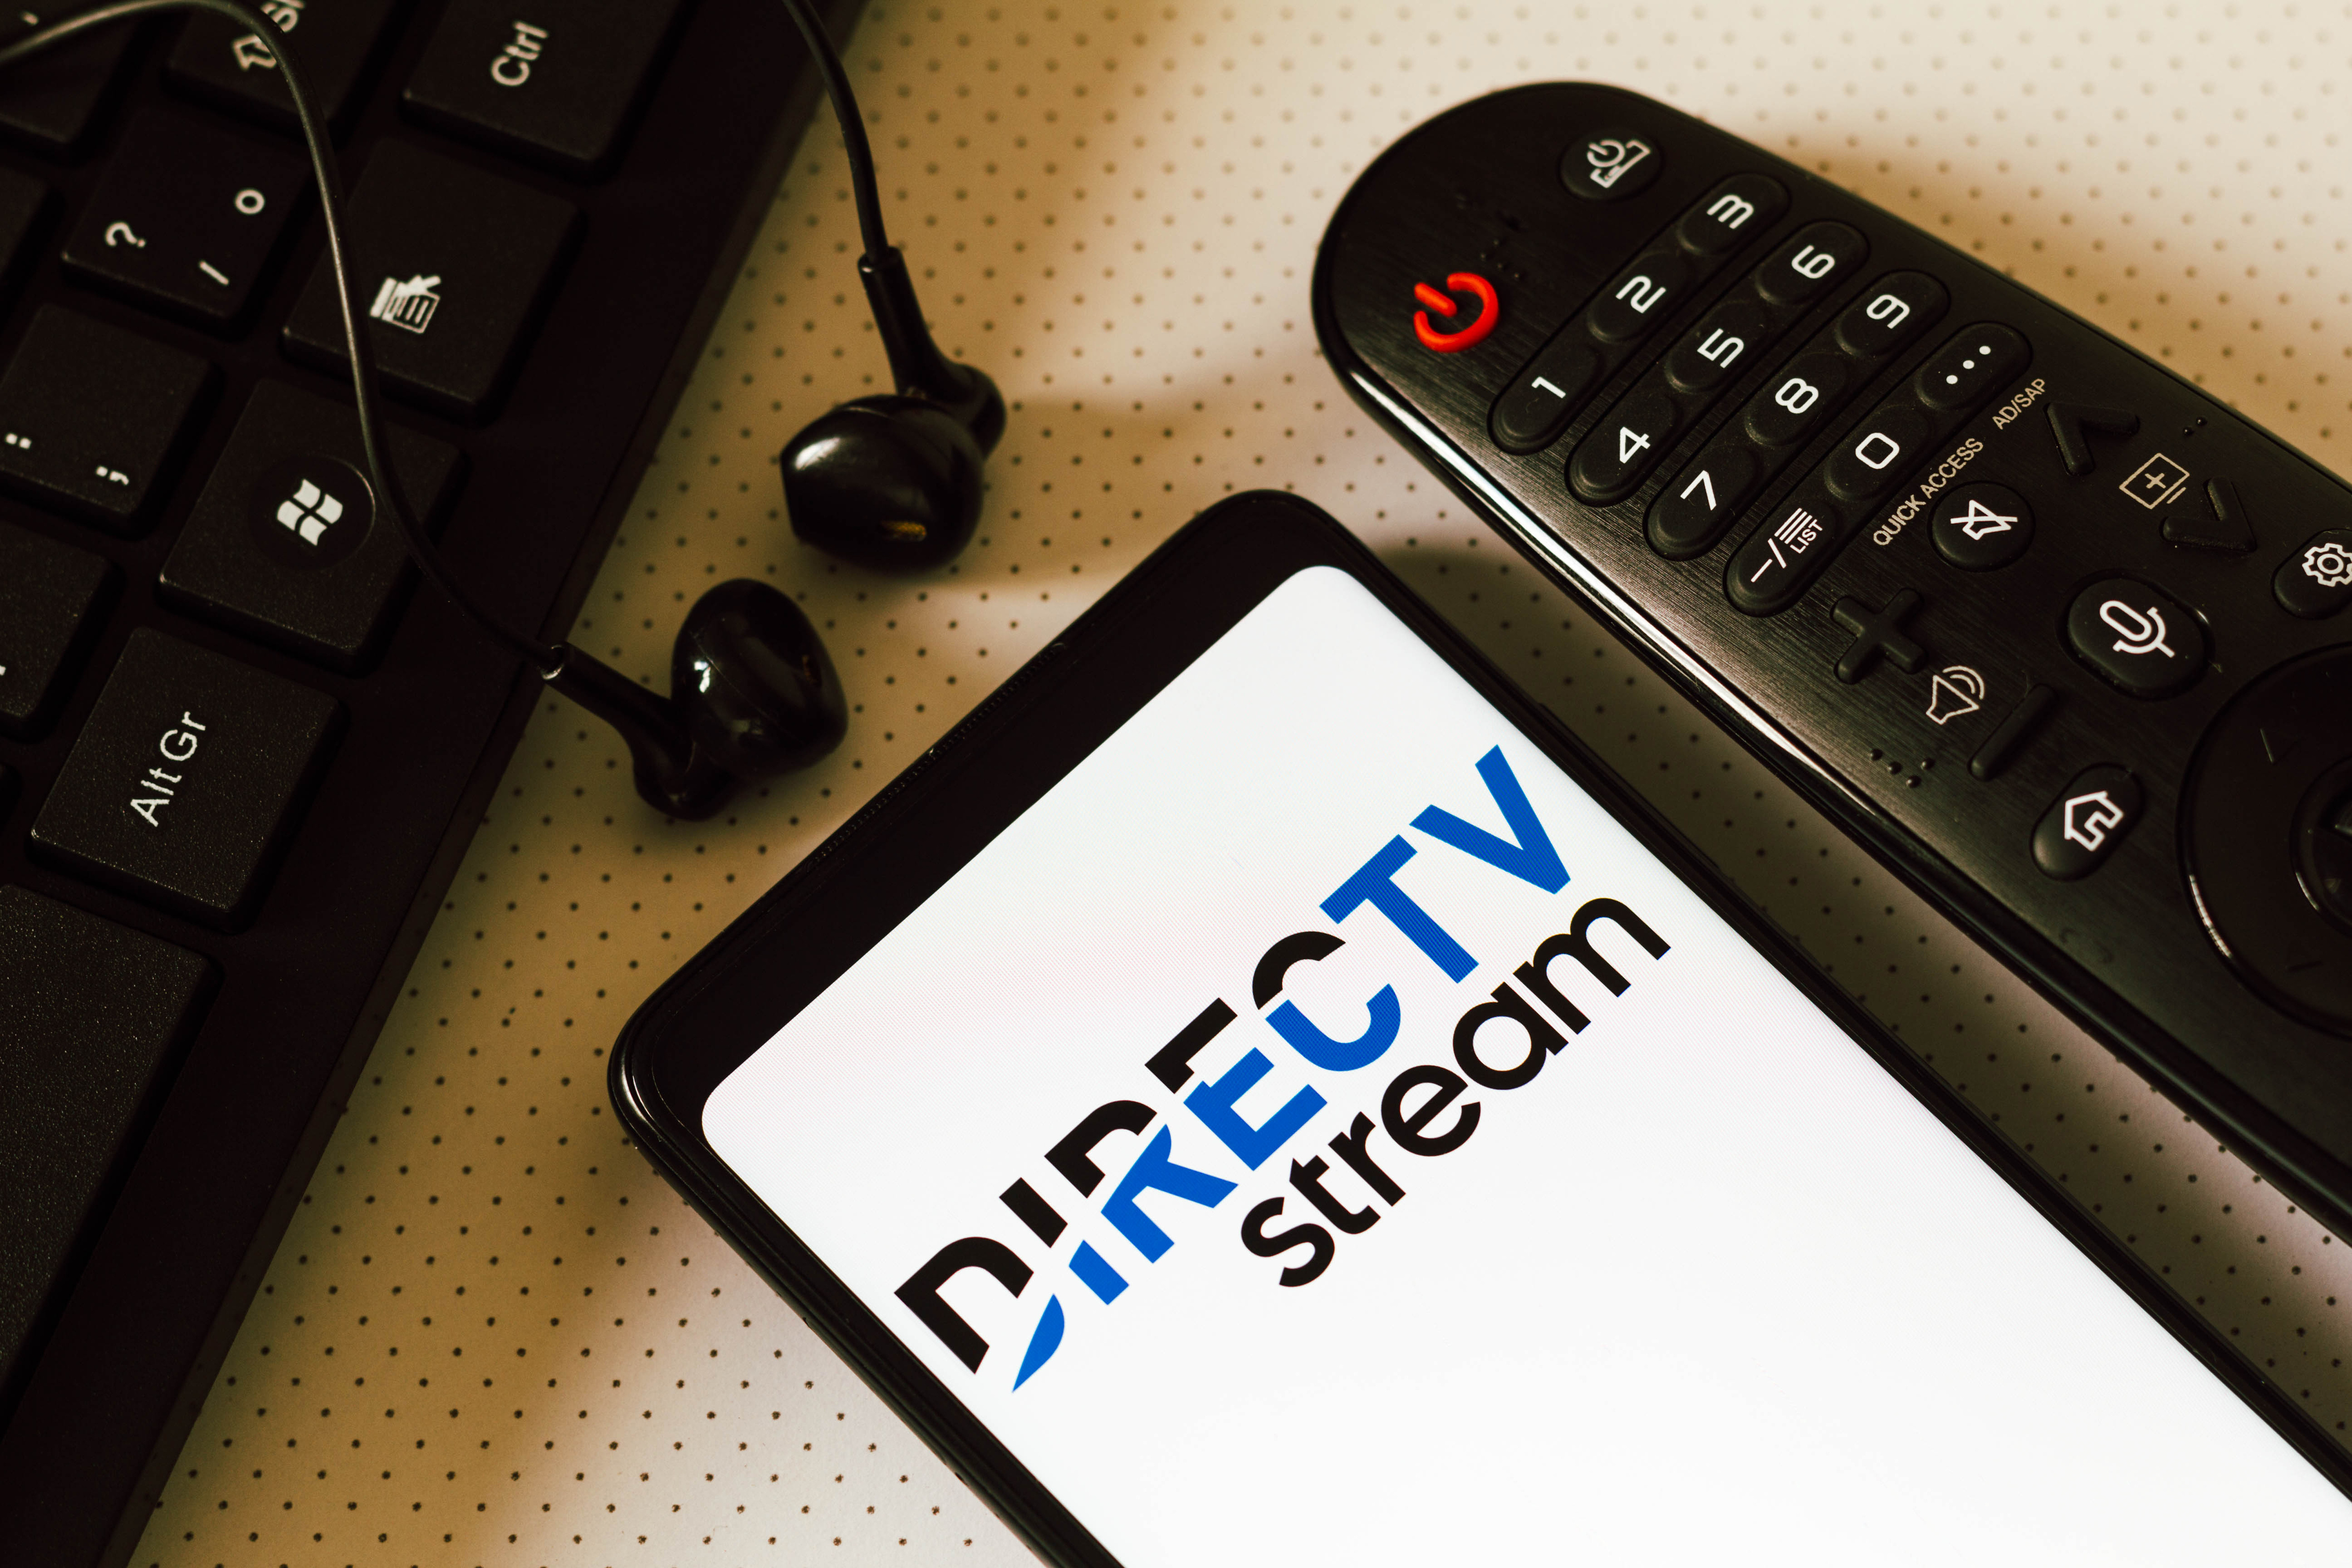 DIRECTV stream logo on a smartphone